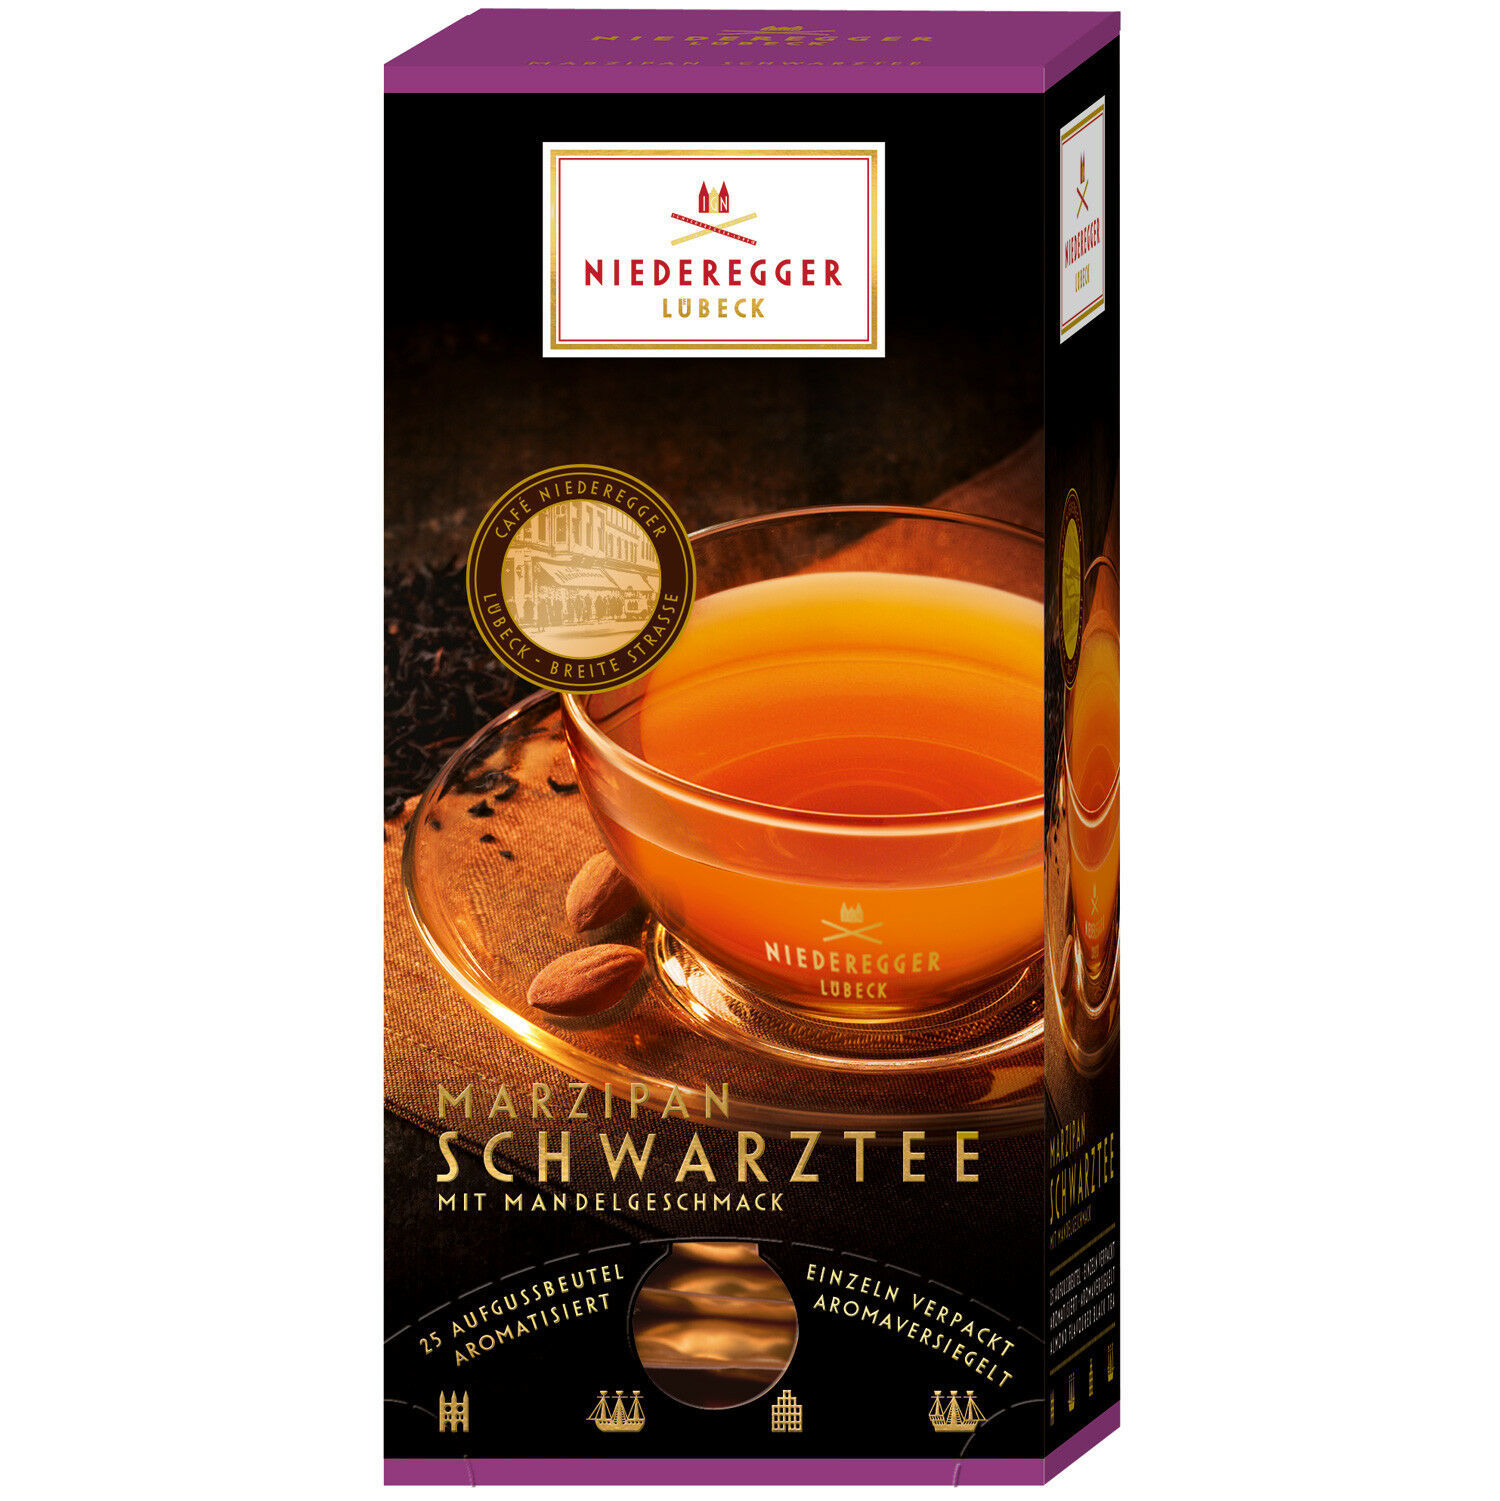 Niederegger marzipan tea -25 portions -43,75g-FREE SHIPPING